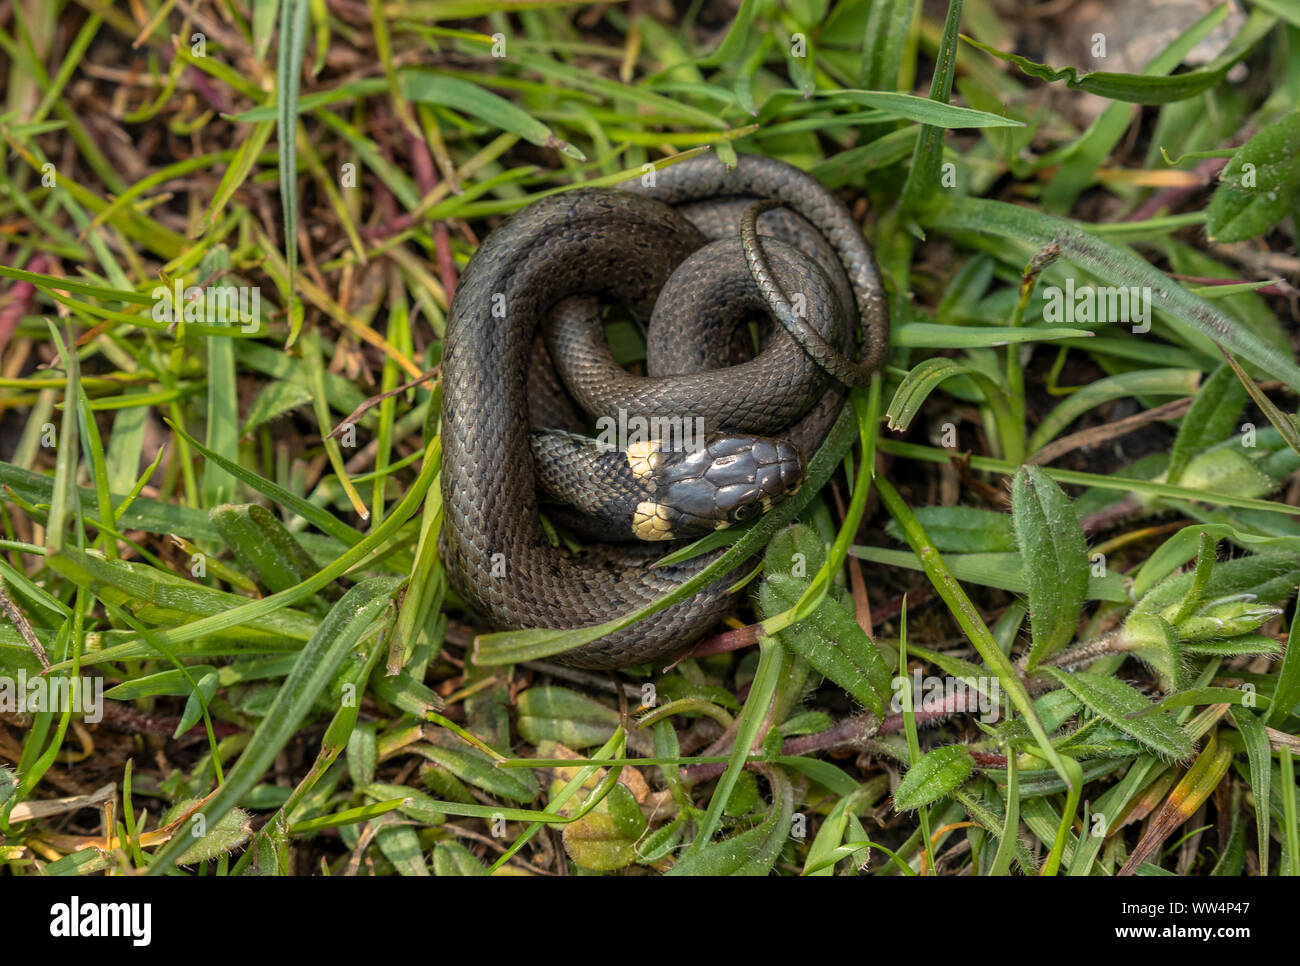 Young Grass Snake, Natrix natrix near wetland in spring. Stock Photo